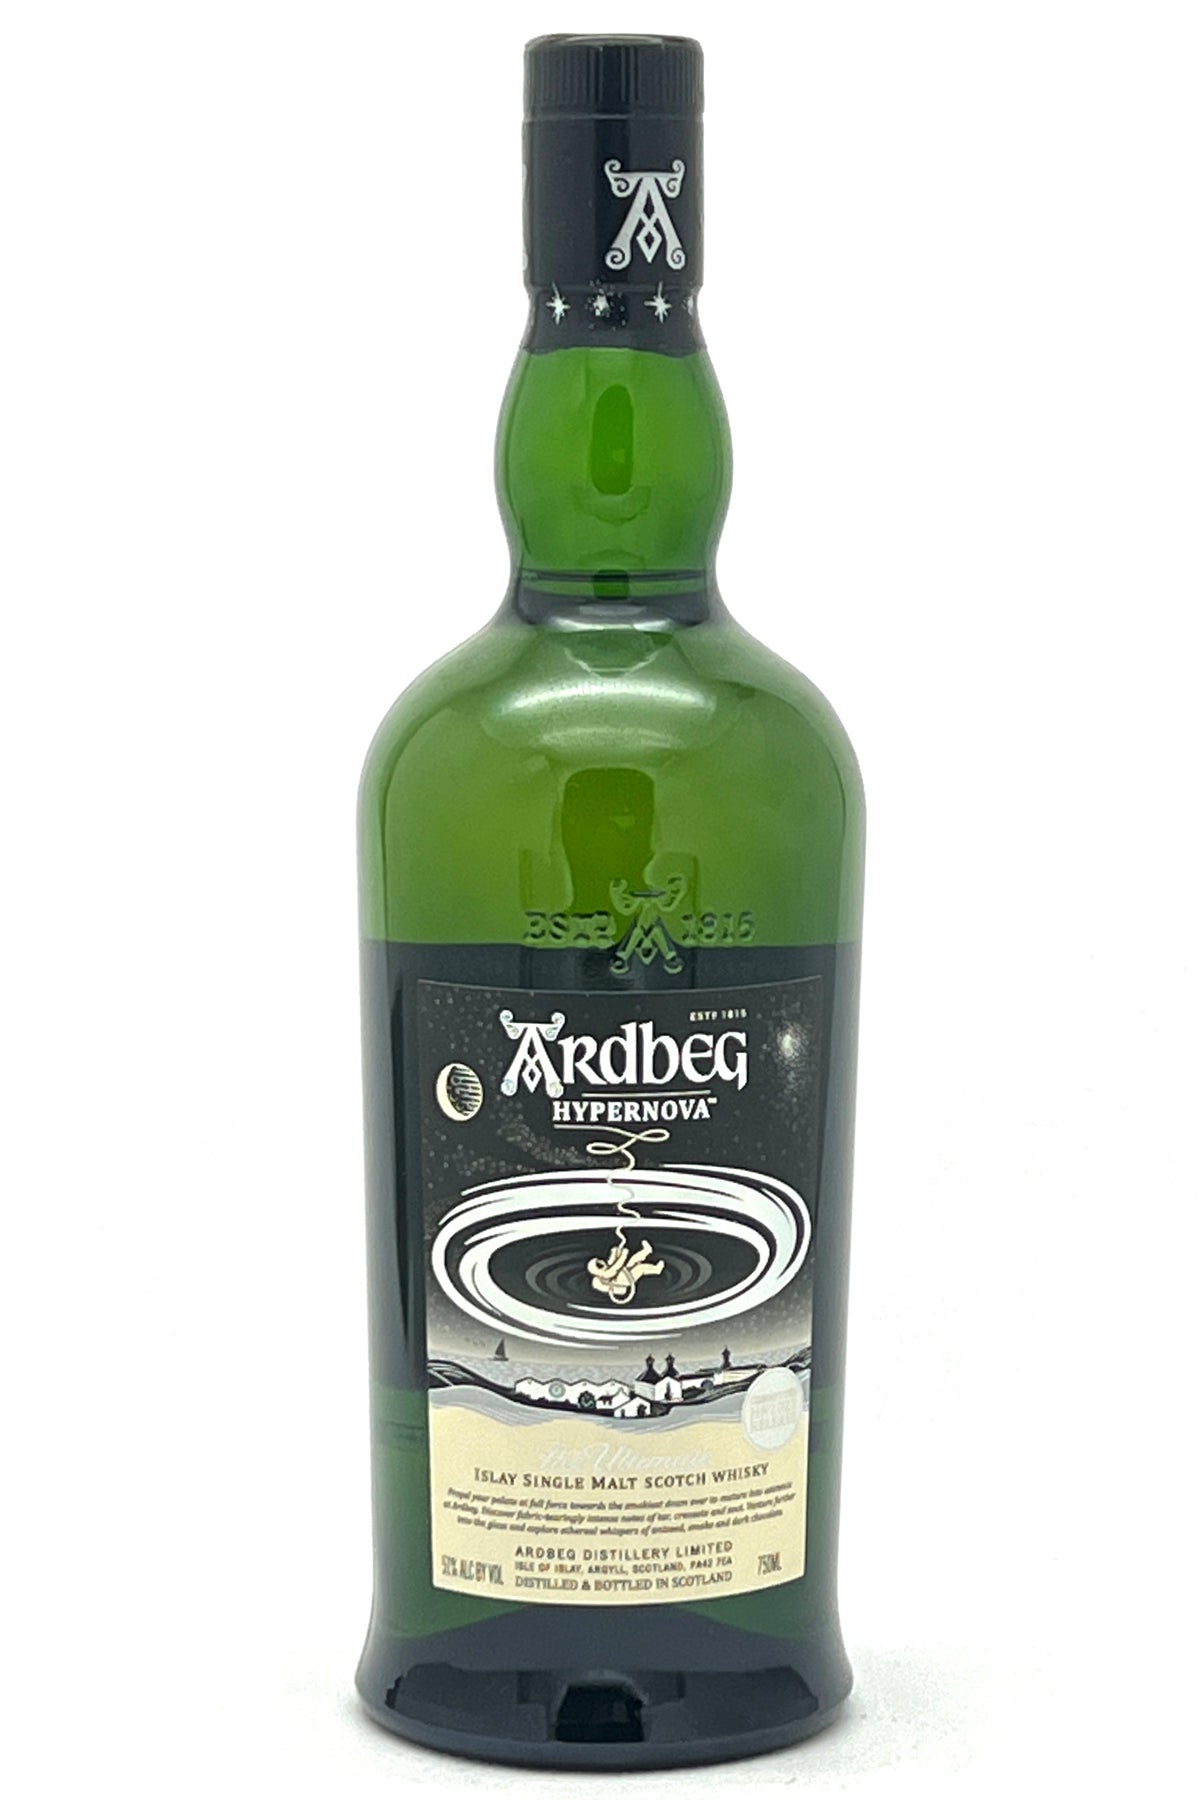 Ardbeg Hypernova Scotch Whisky The Ultimate Special Edition